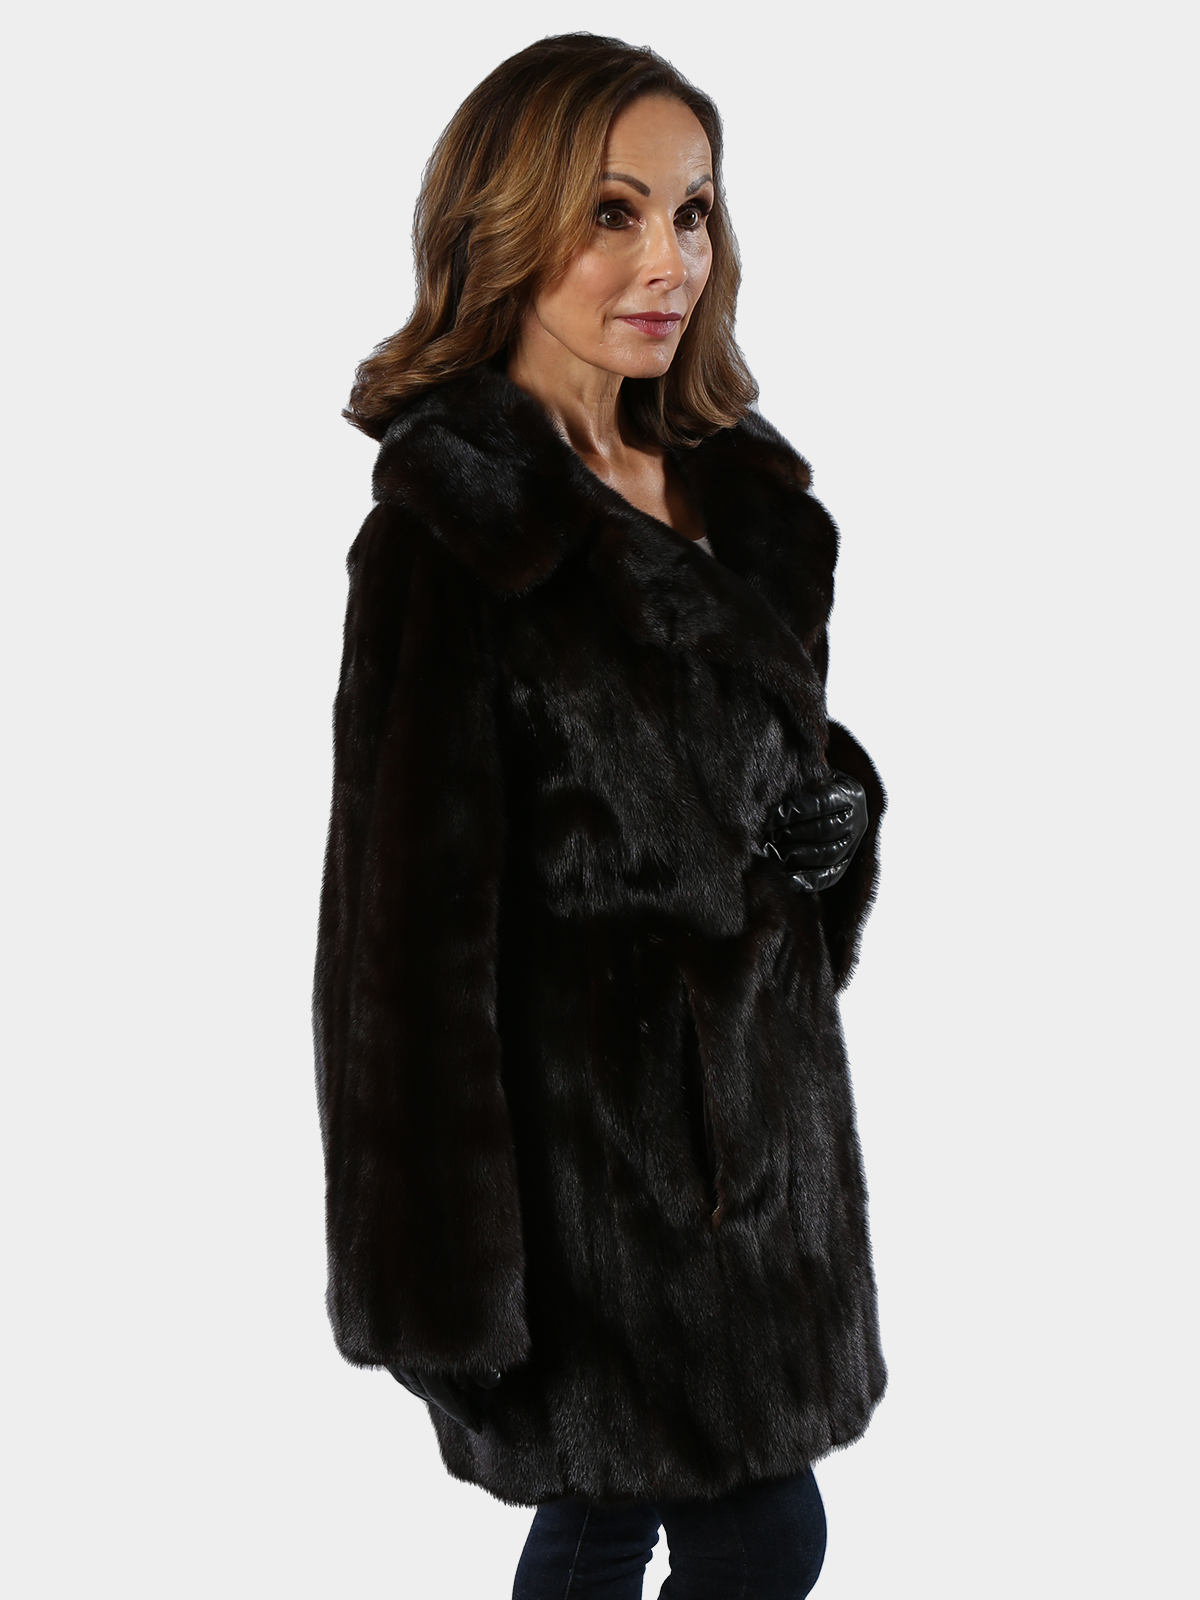 Ranch Mink Fur Jacket (Women's Medium) - Estate Furs